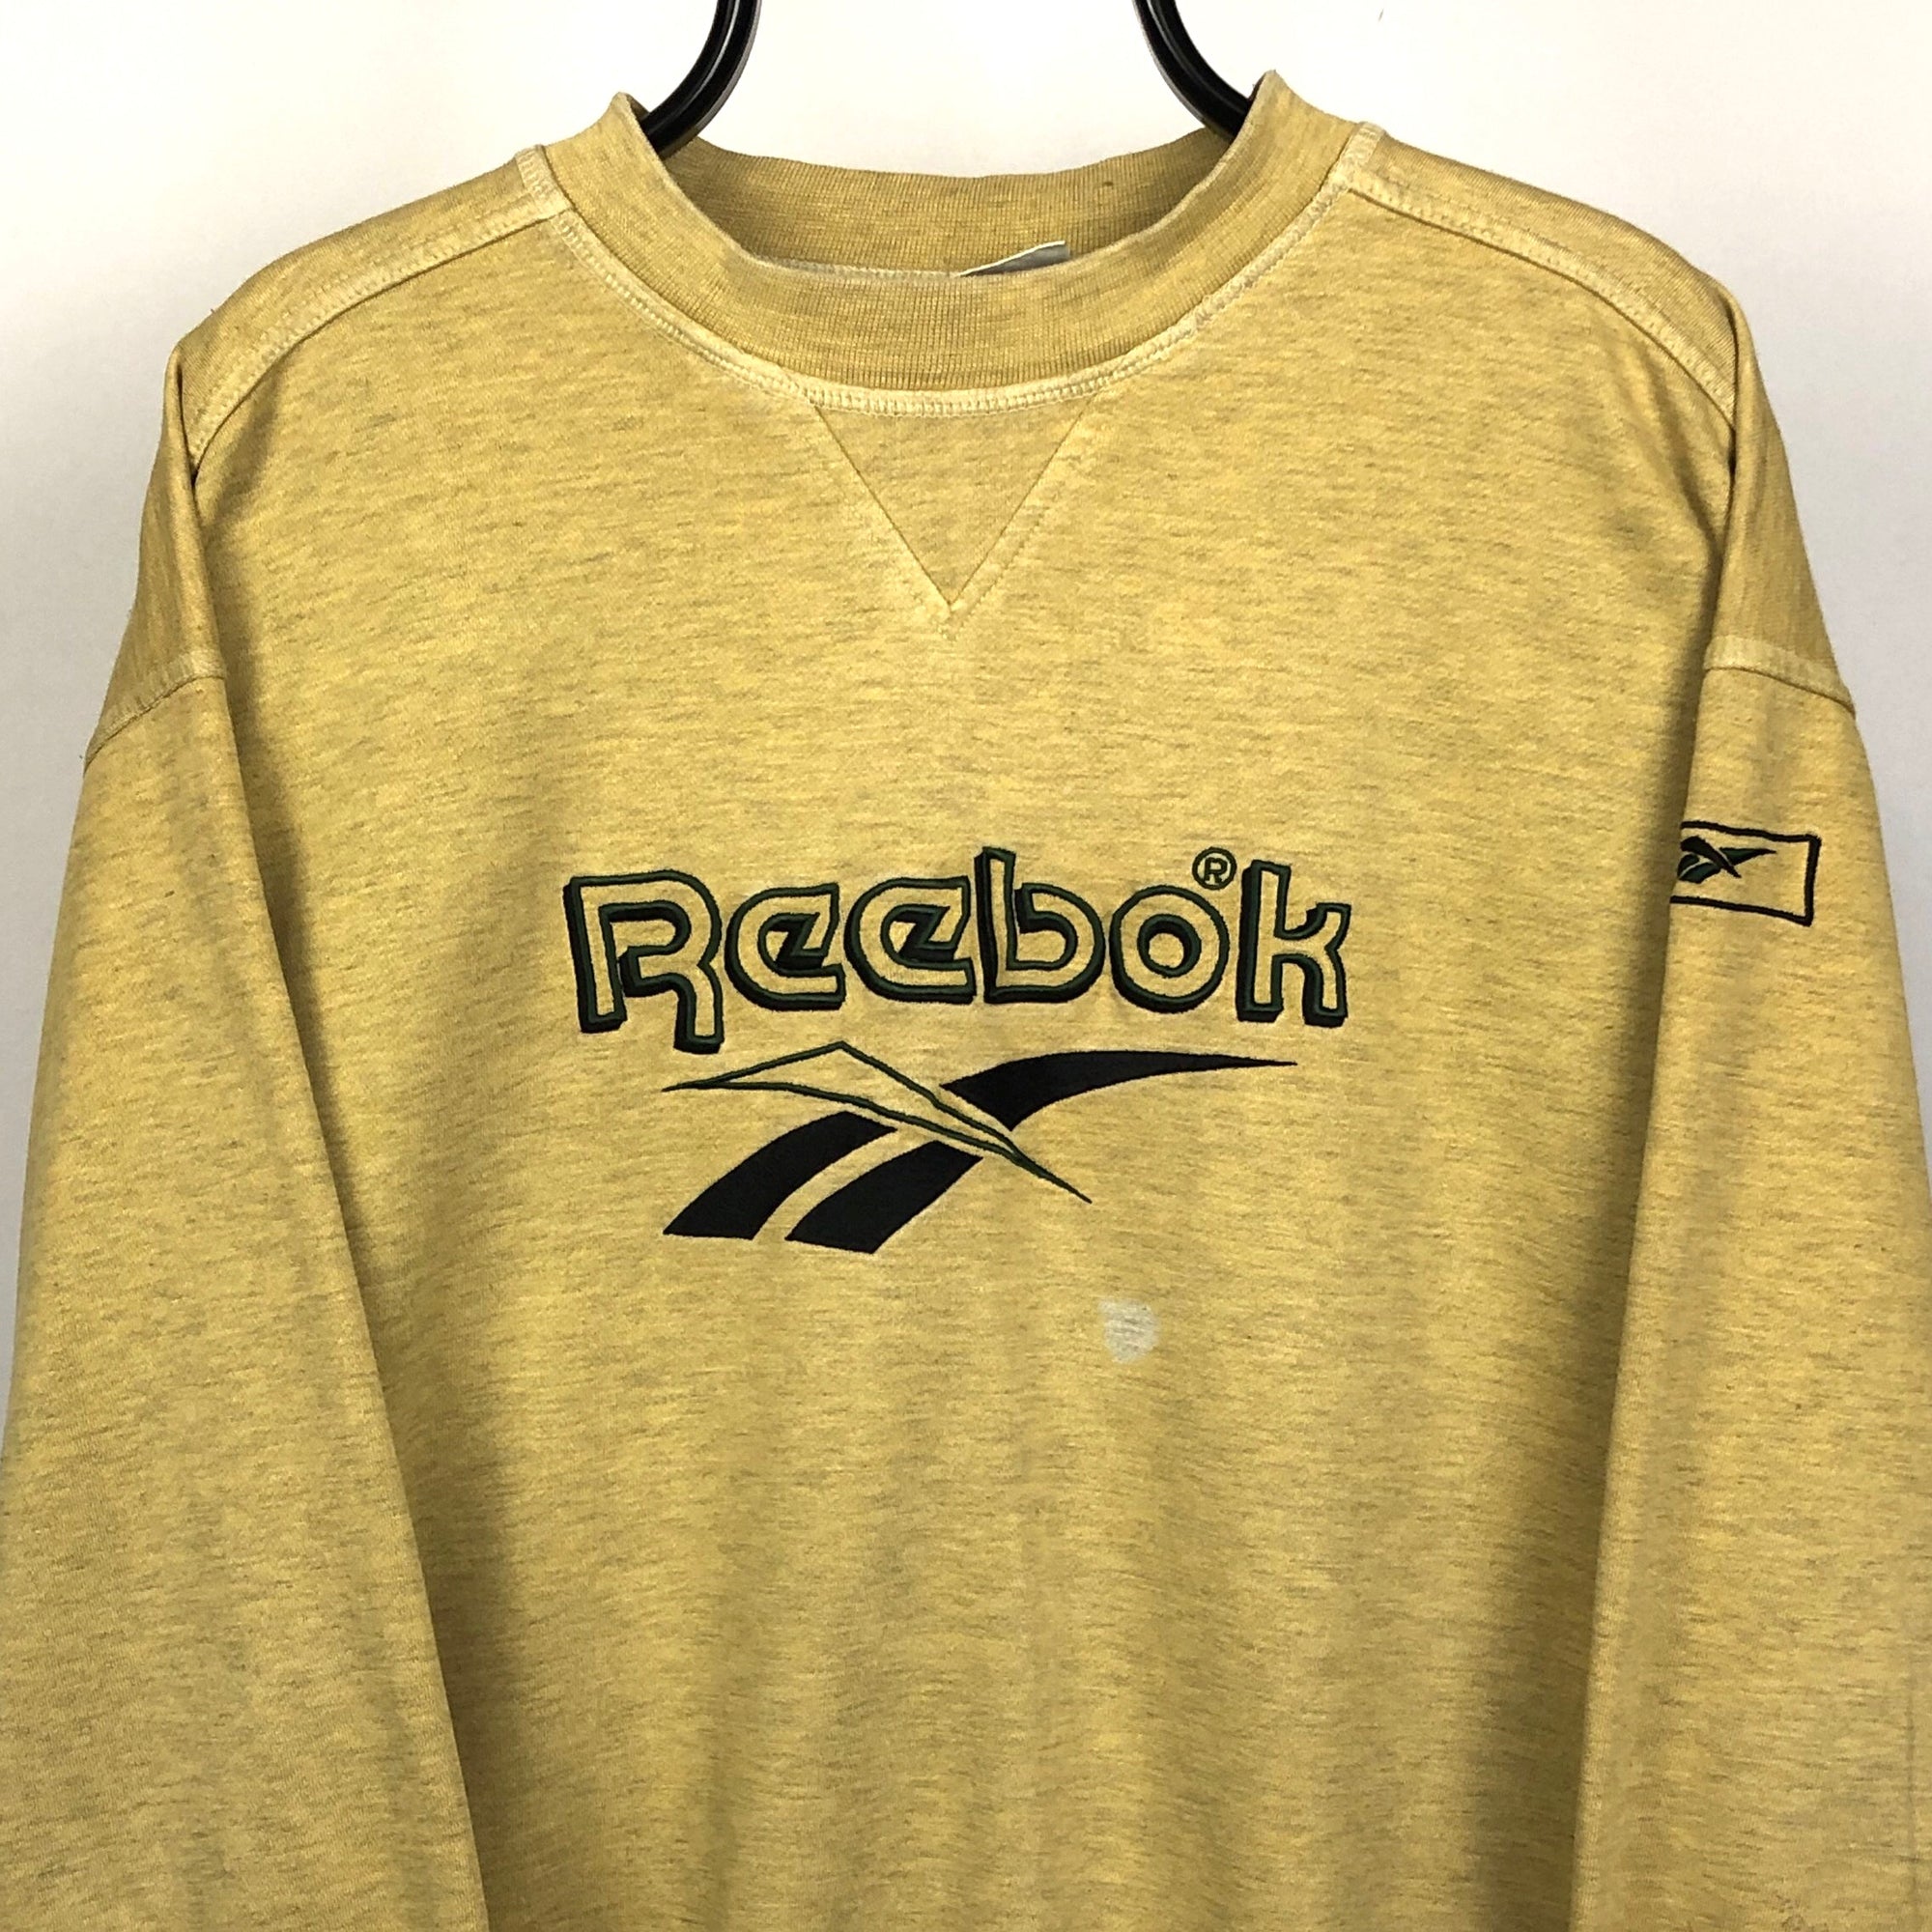 Vintage Reebok Spellout Sweatshirt in Yellow - Men's Large/Women's XL